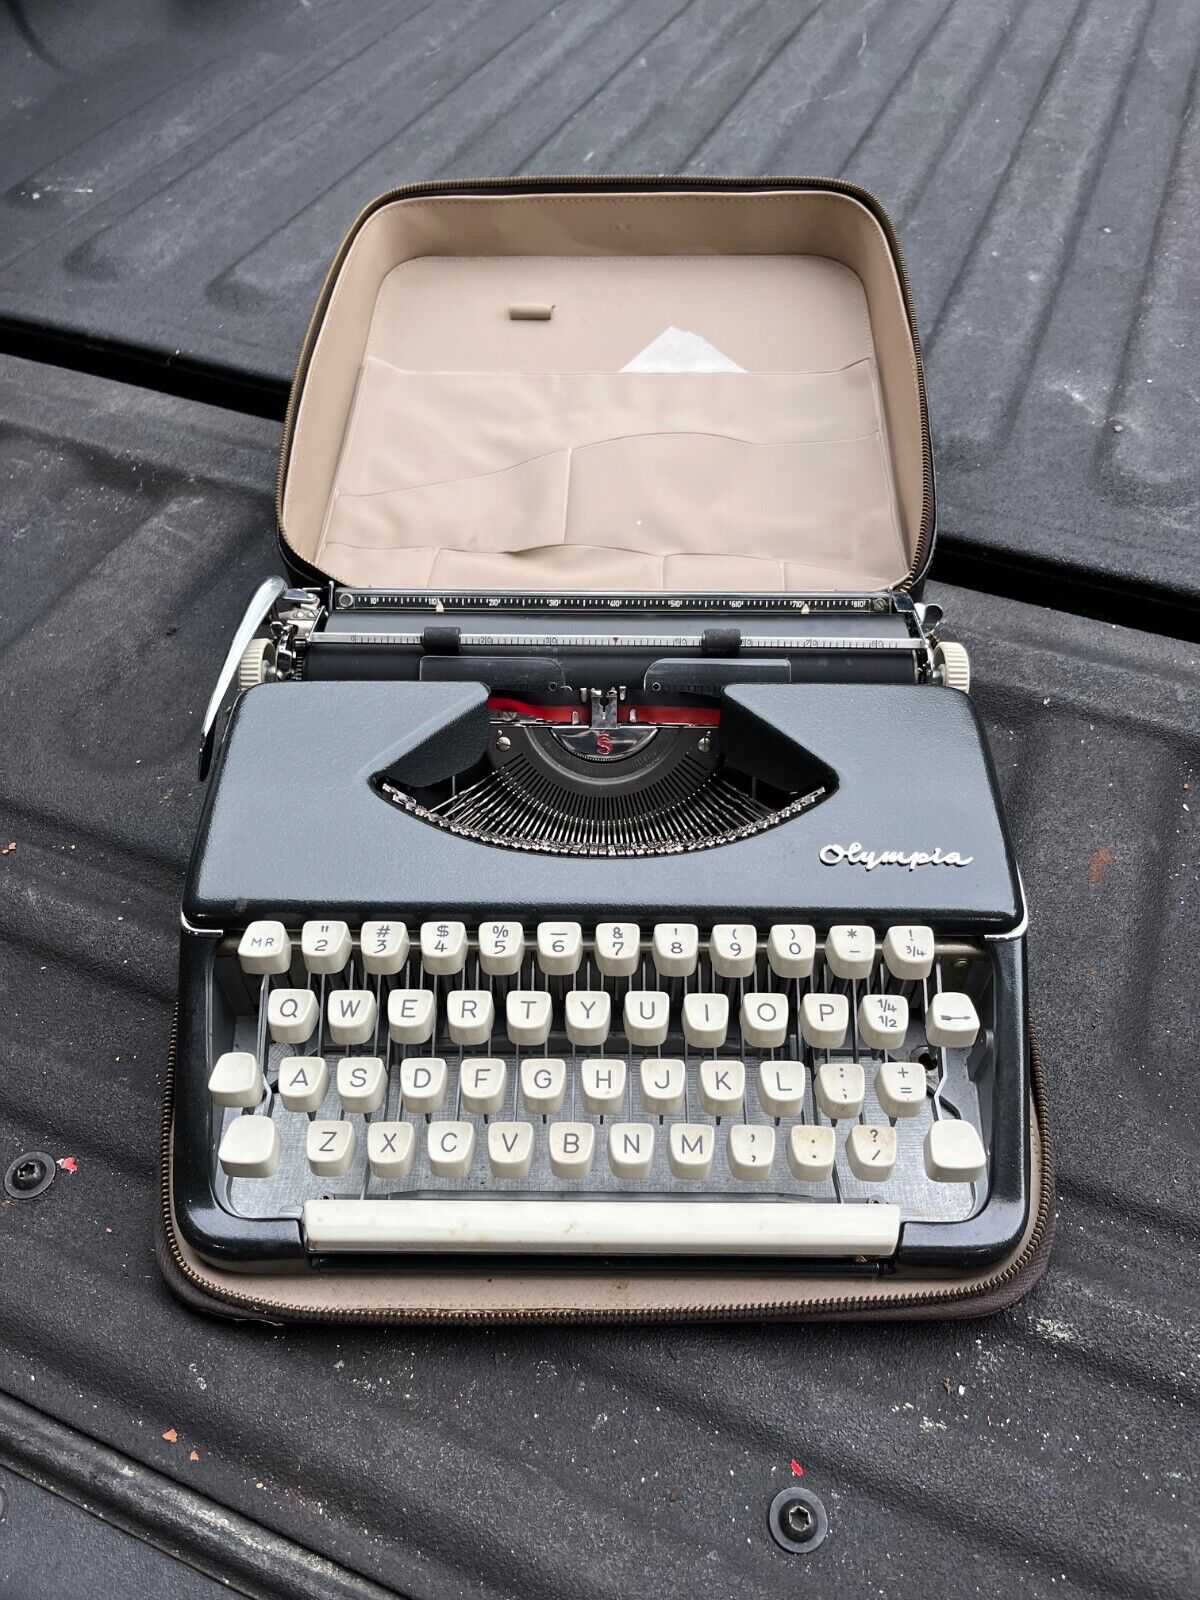 1958 Olympia SF typewriter